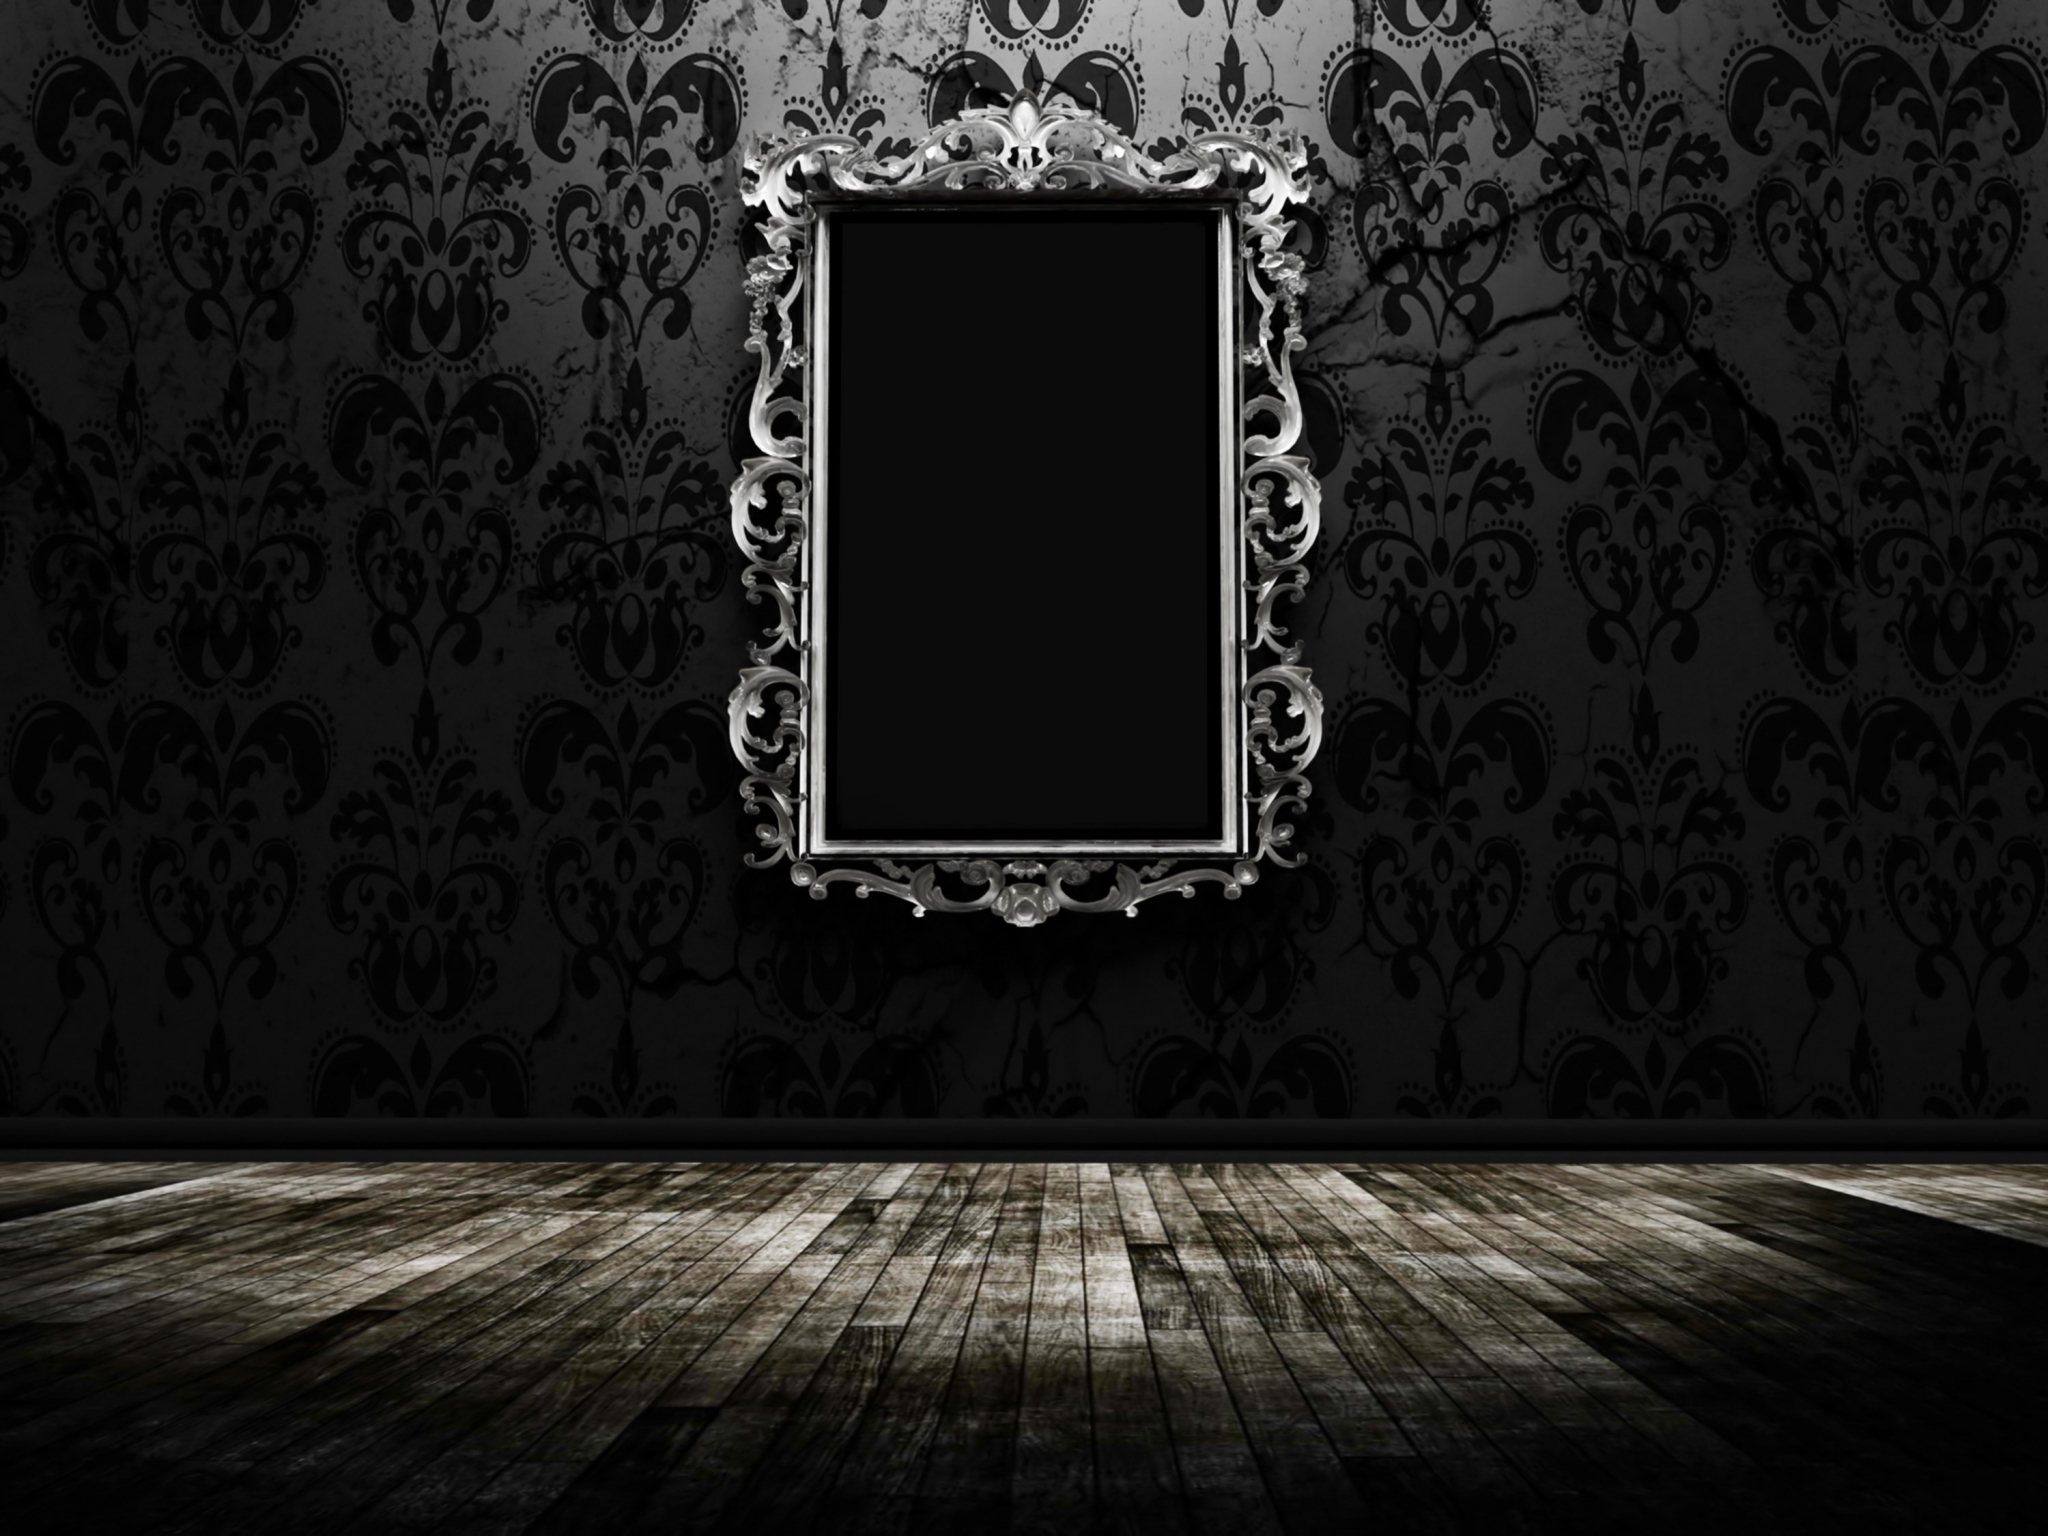 Black Mirror Wallpapers